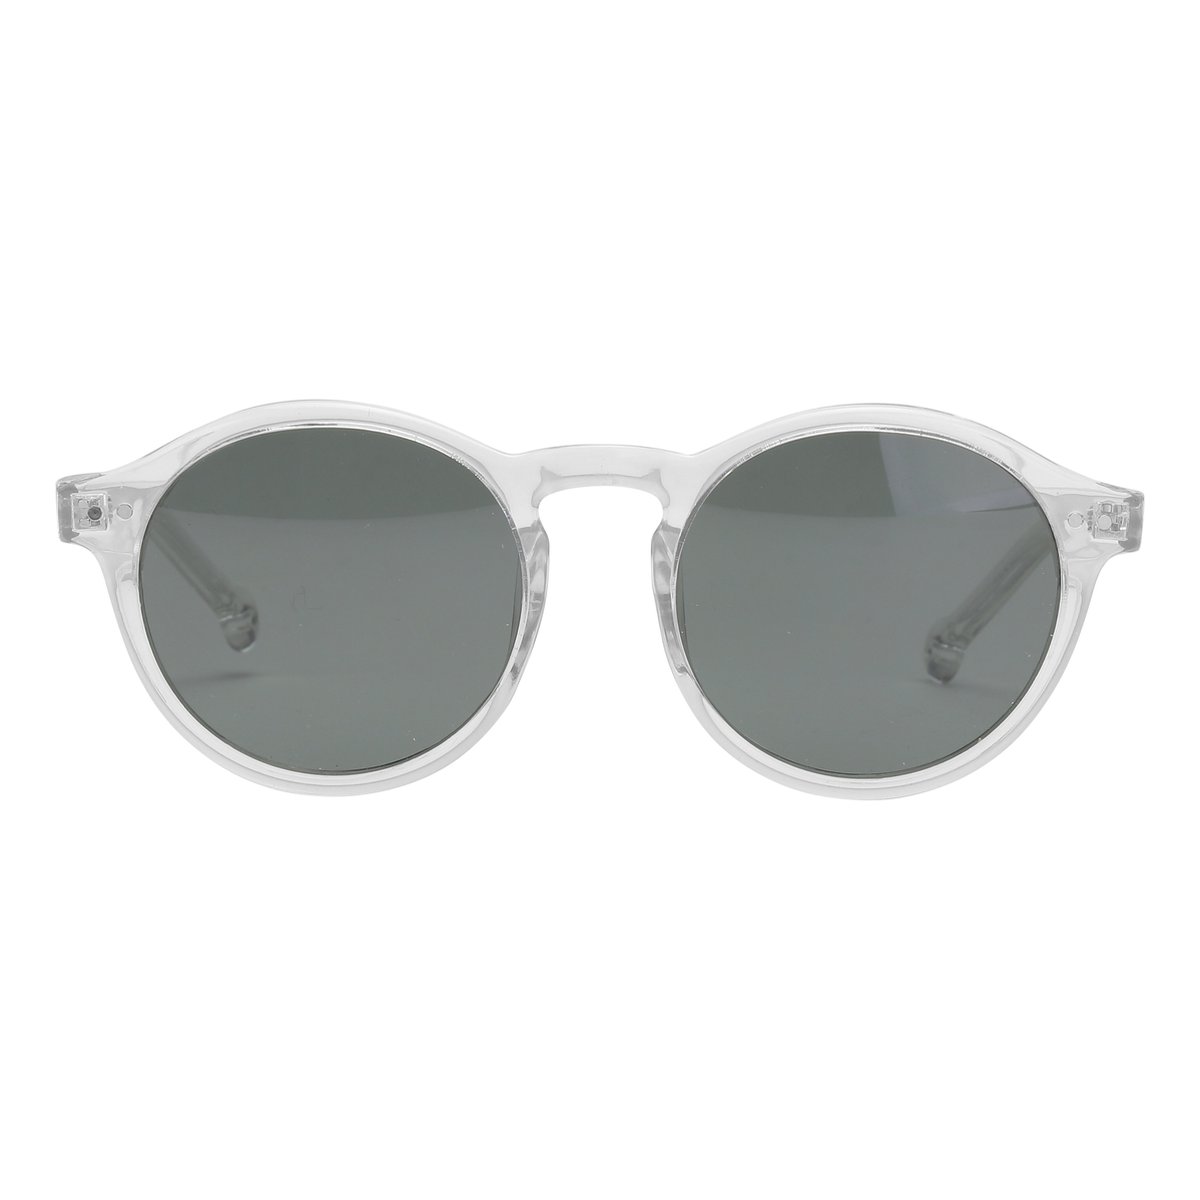 ™Monkeyglasses Bille 00 Transparent Sun - Zonnebril - 100% UV bescherming - Danish Design - 100% Upcycled